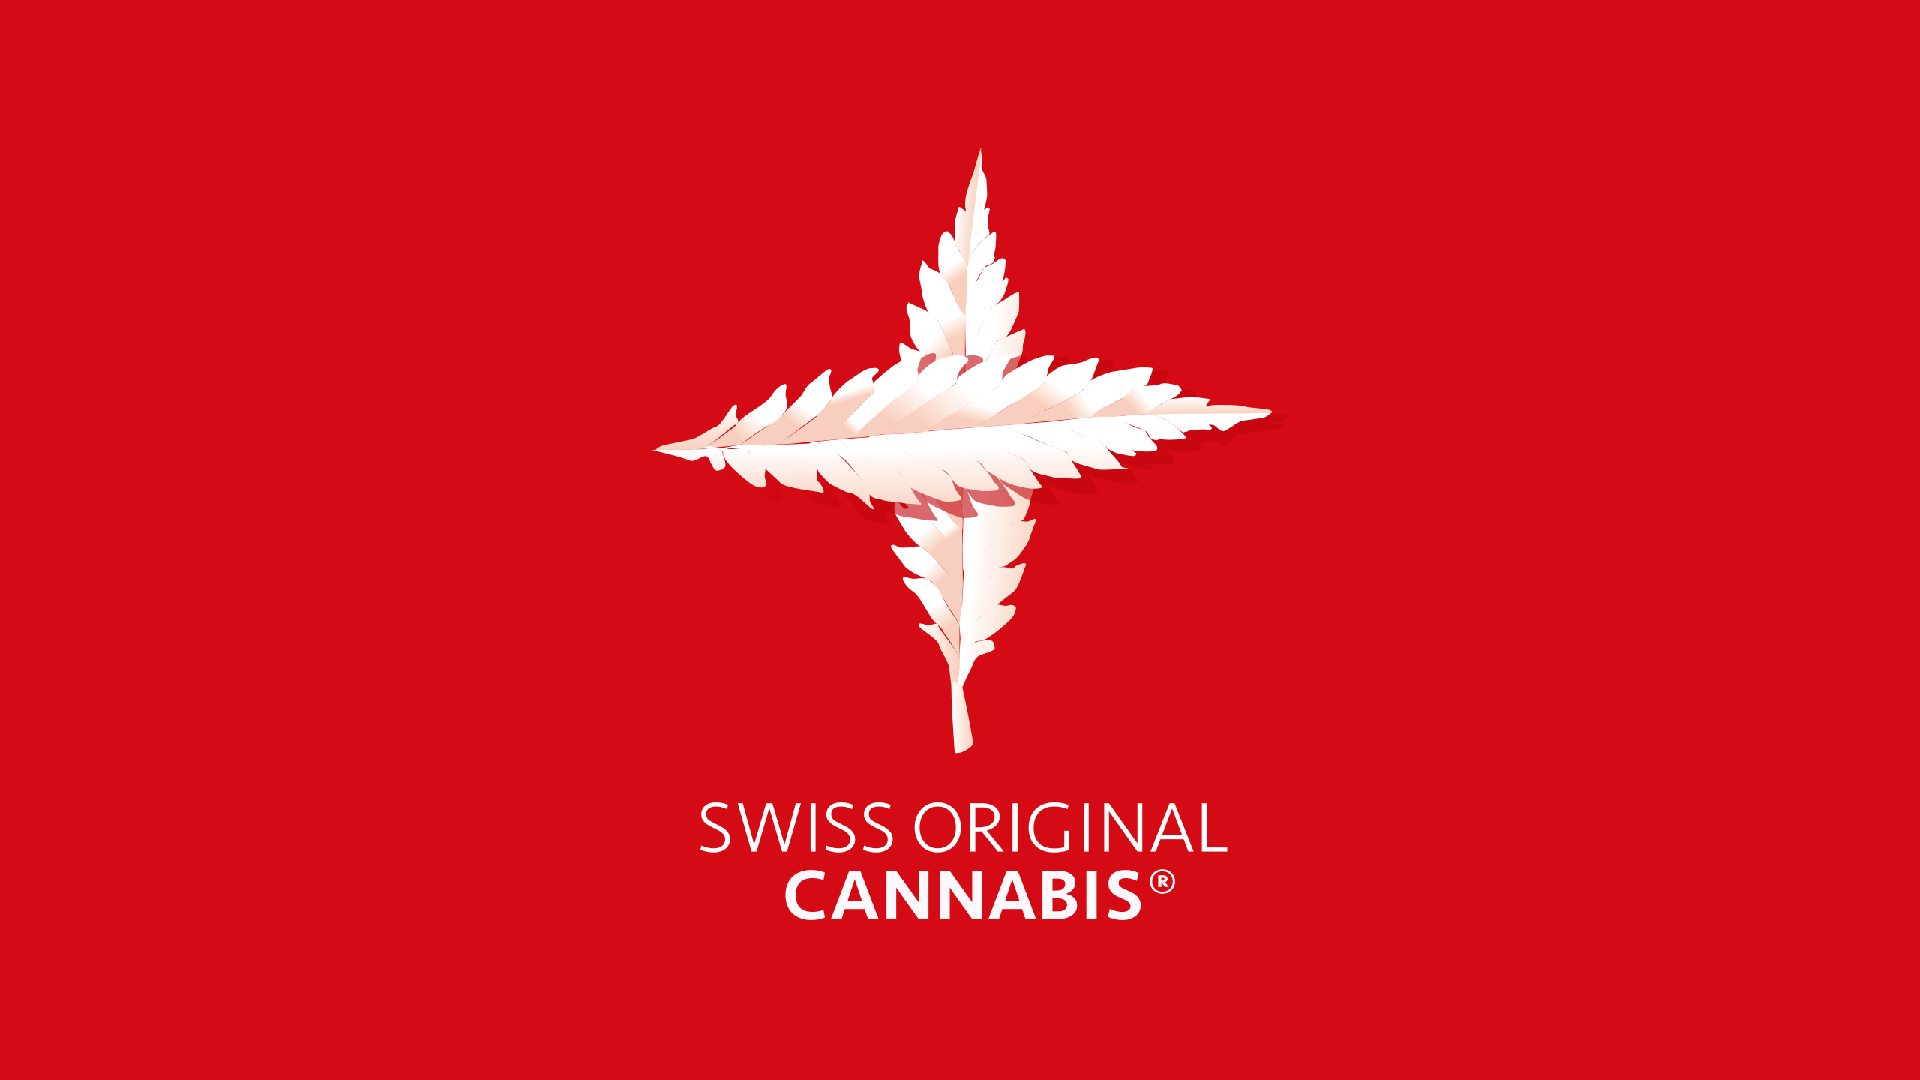 Swiss Original Cannabis